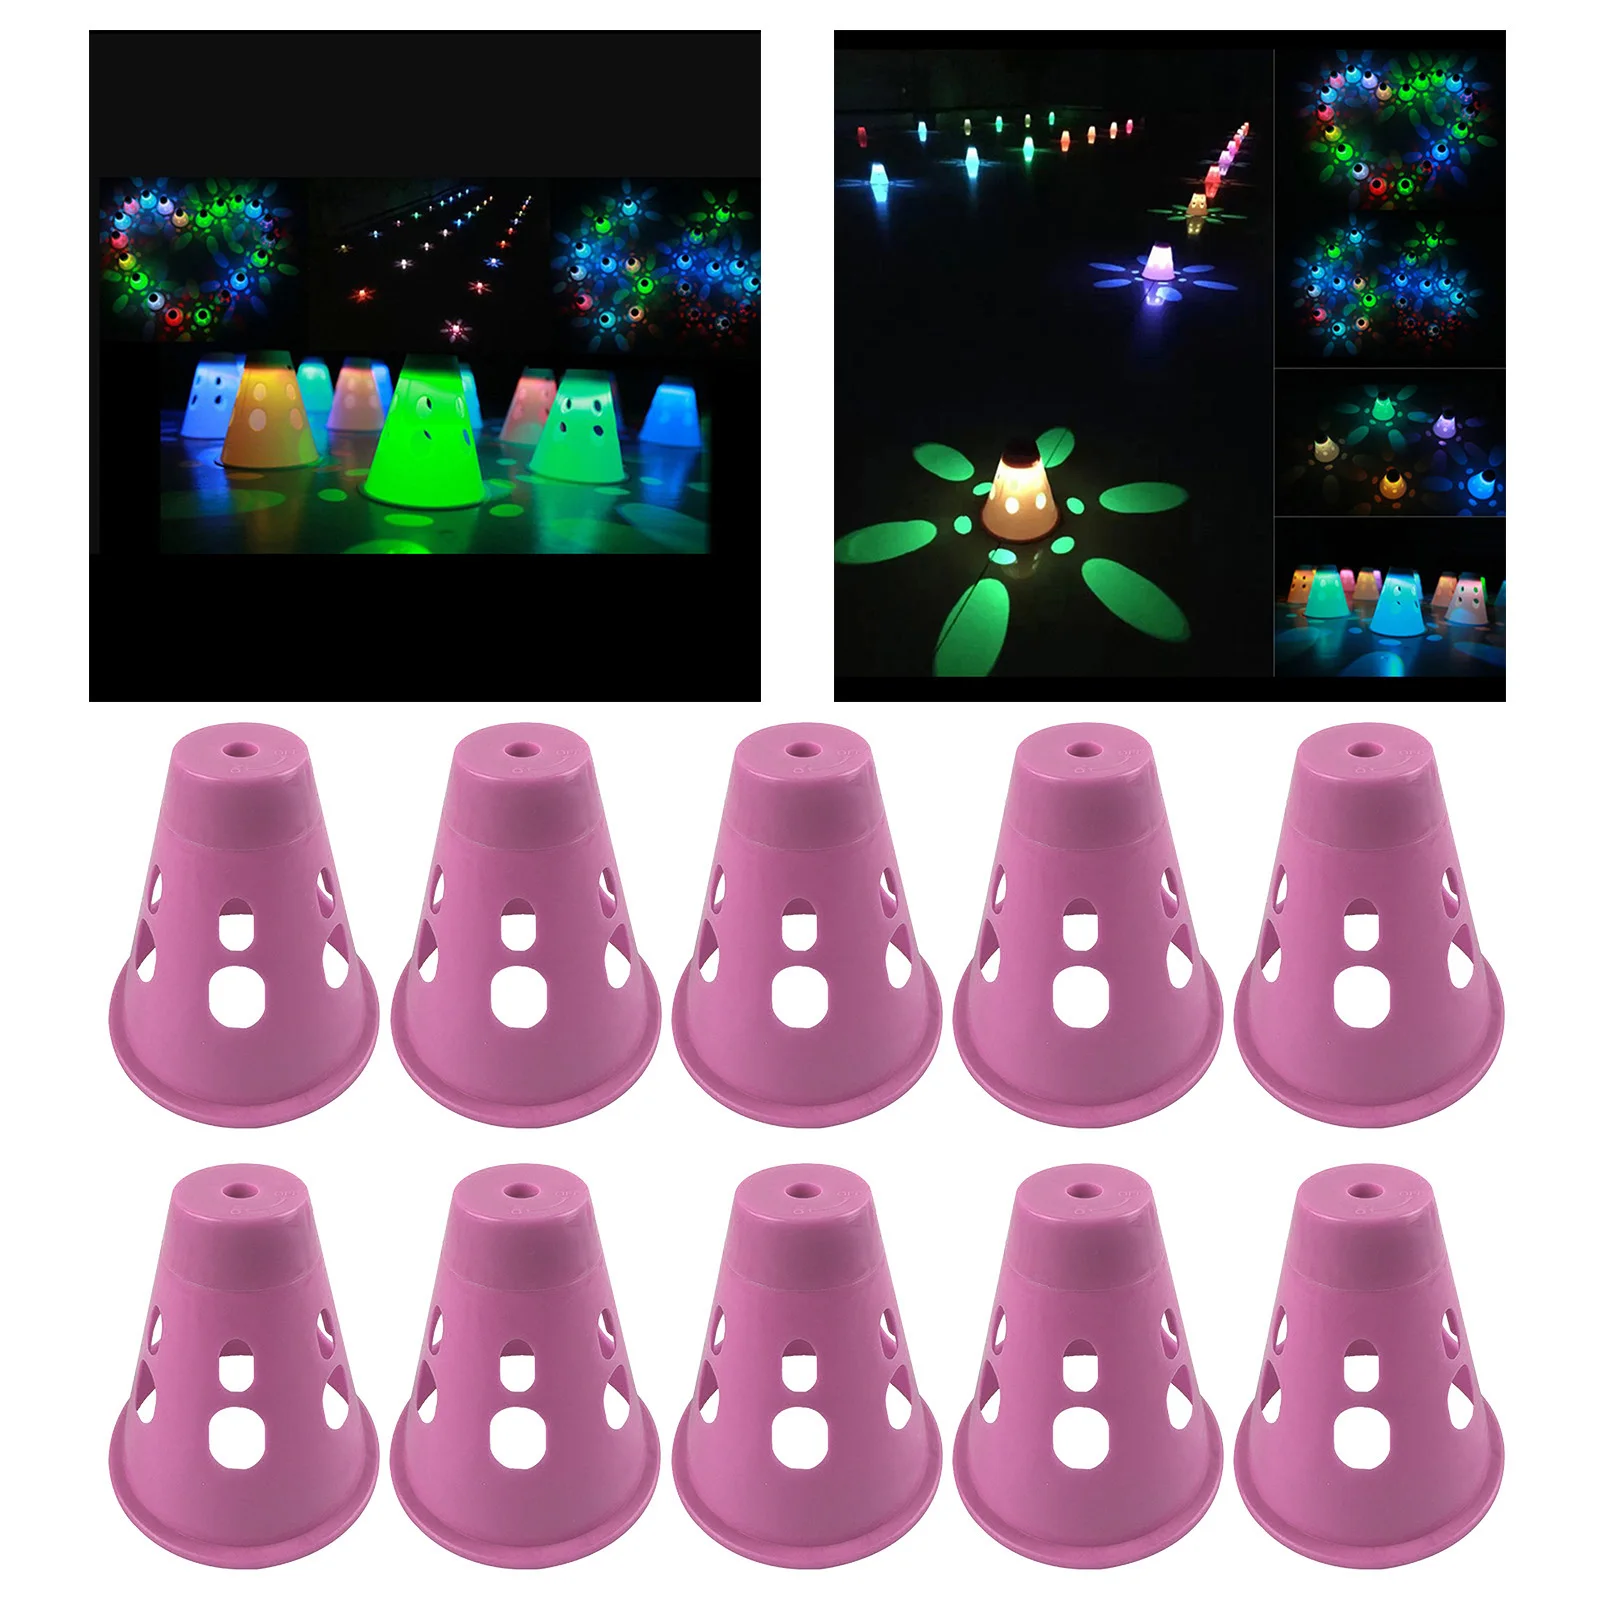 10pcs 7.8x8cm Plastic LED Skating Cones Light Up Ground Light